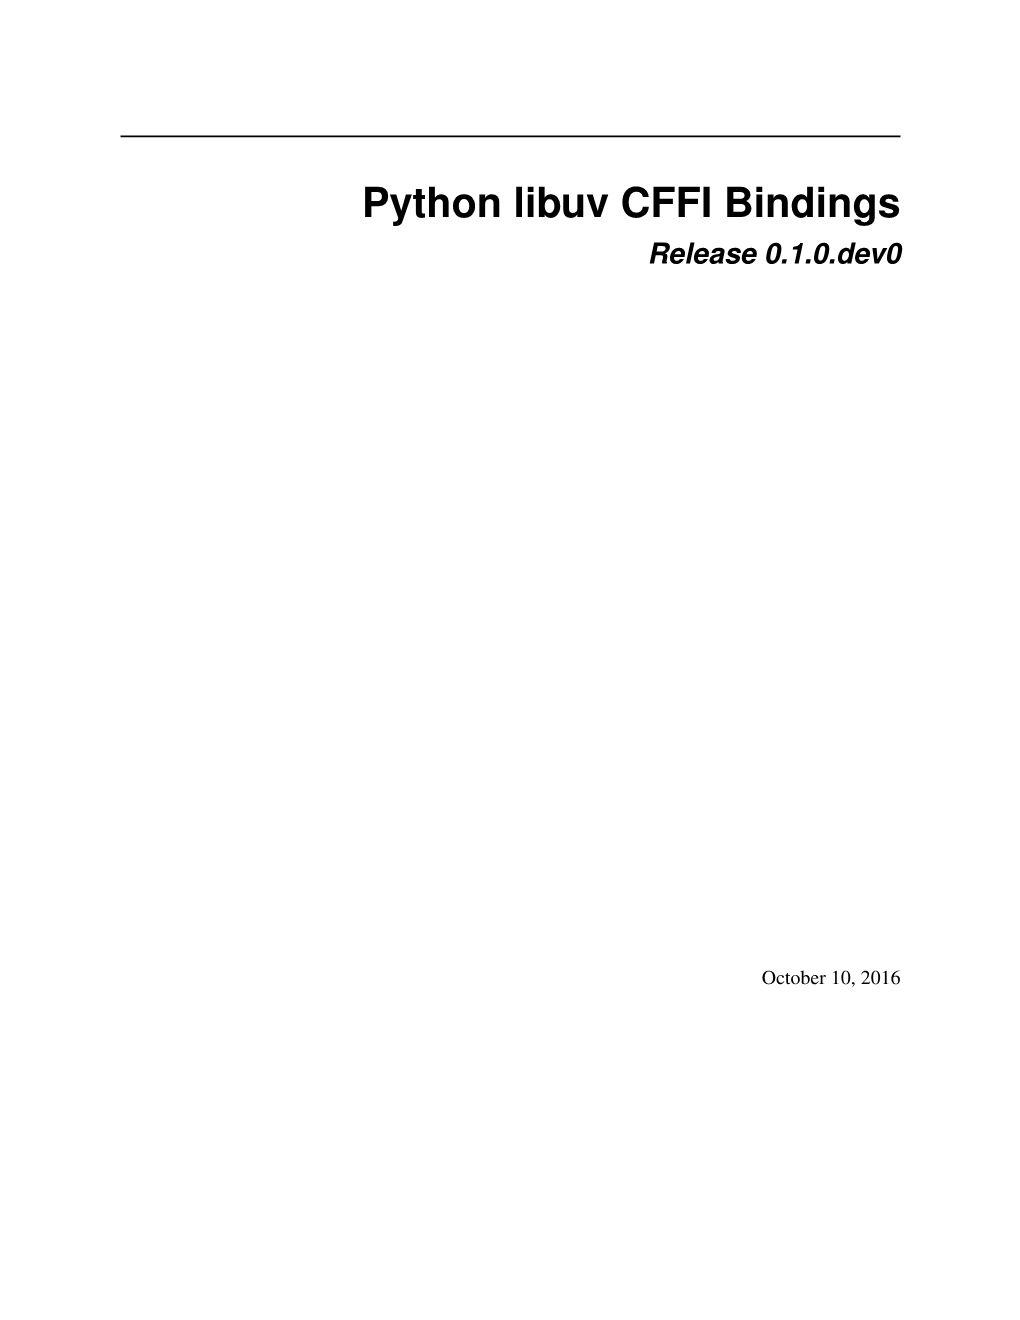 Python Libuv CFFI Bindings Release 0.1.0.Dev0